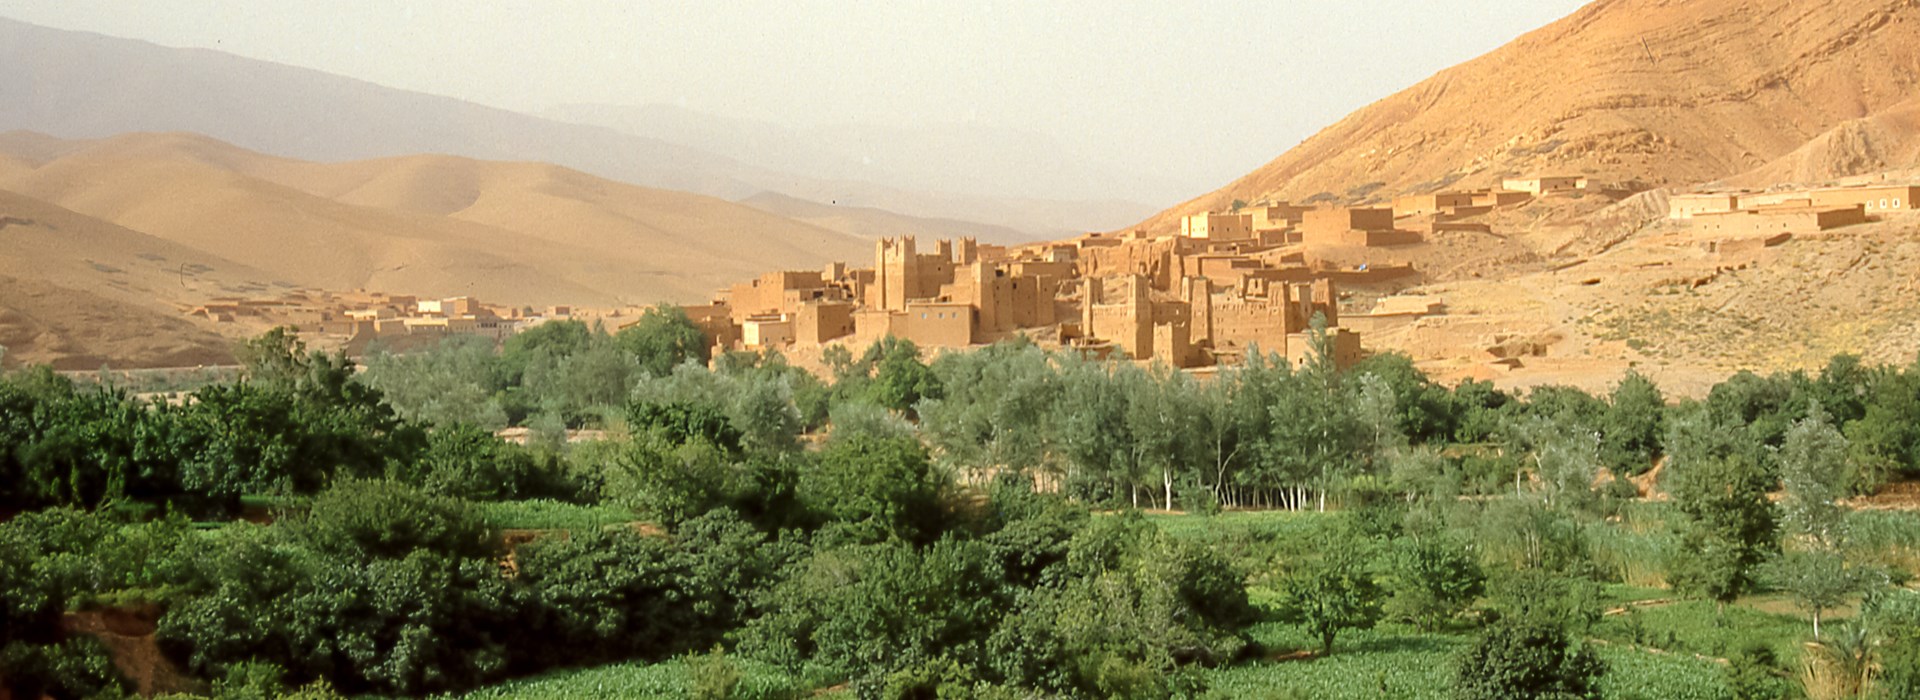 Visiter La vallée du Draa - Maroc